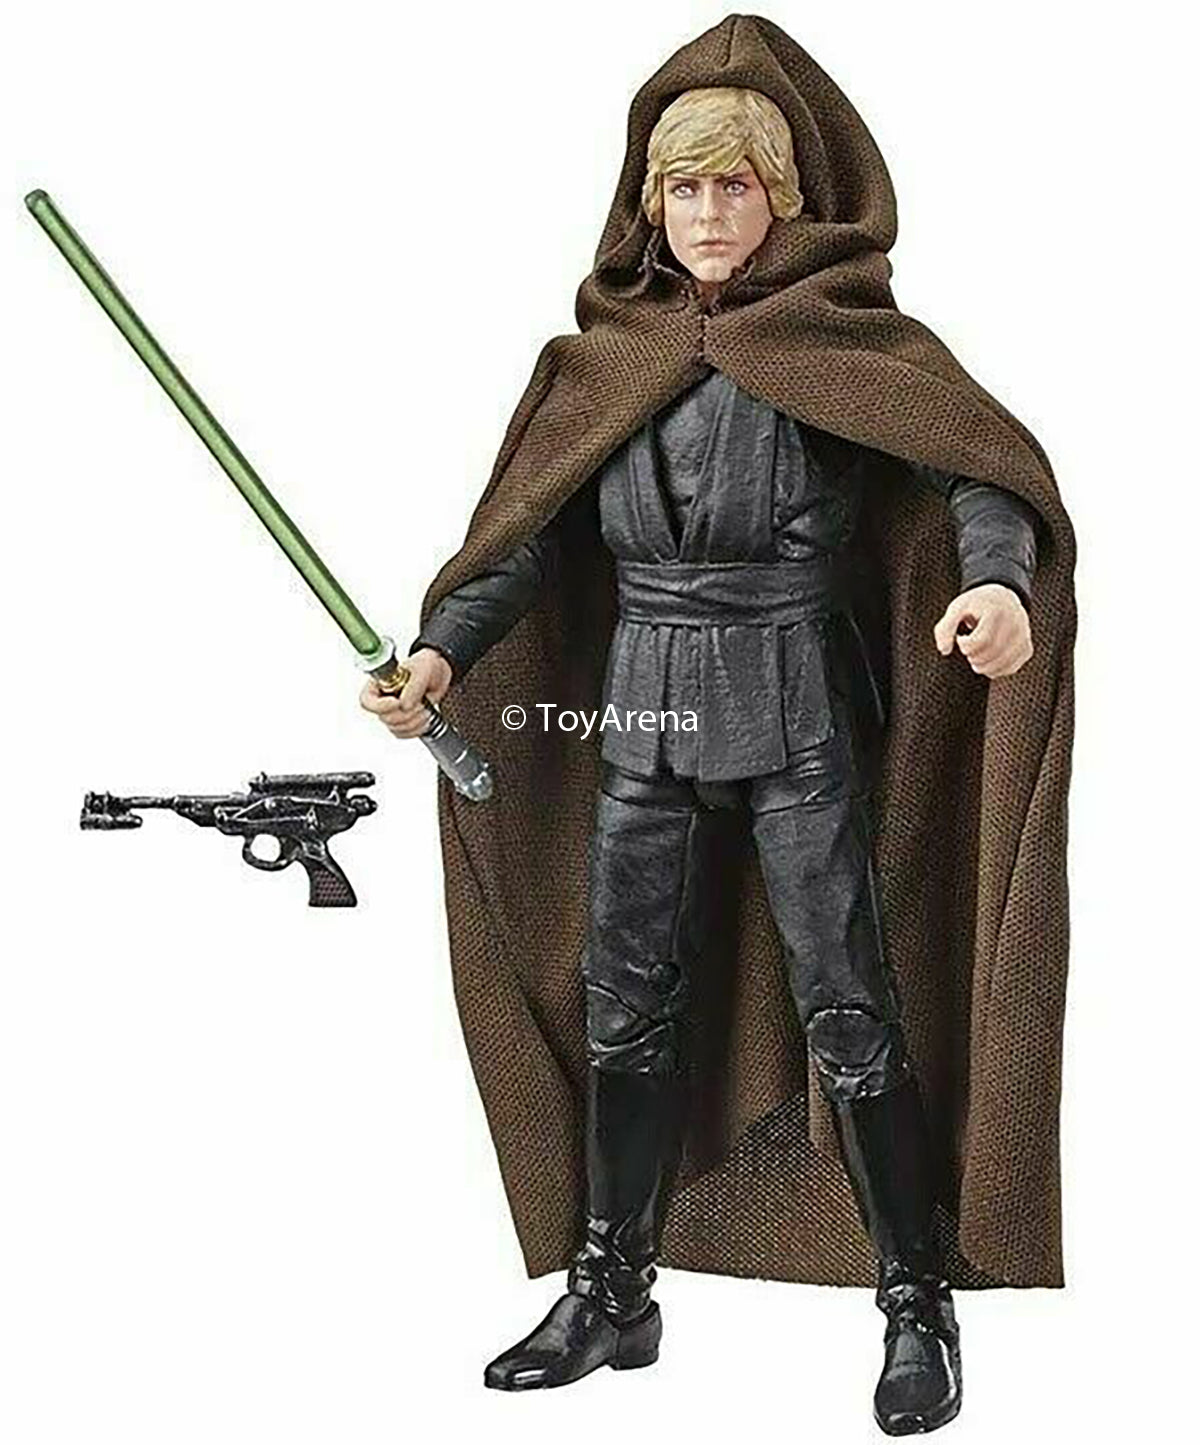 Hasbro Star Wars Black Series Jedi Knight Luke Skywalker Chevalier Walmart Exclusive 6 Inch Action Figure